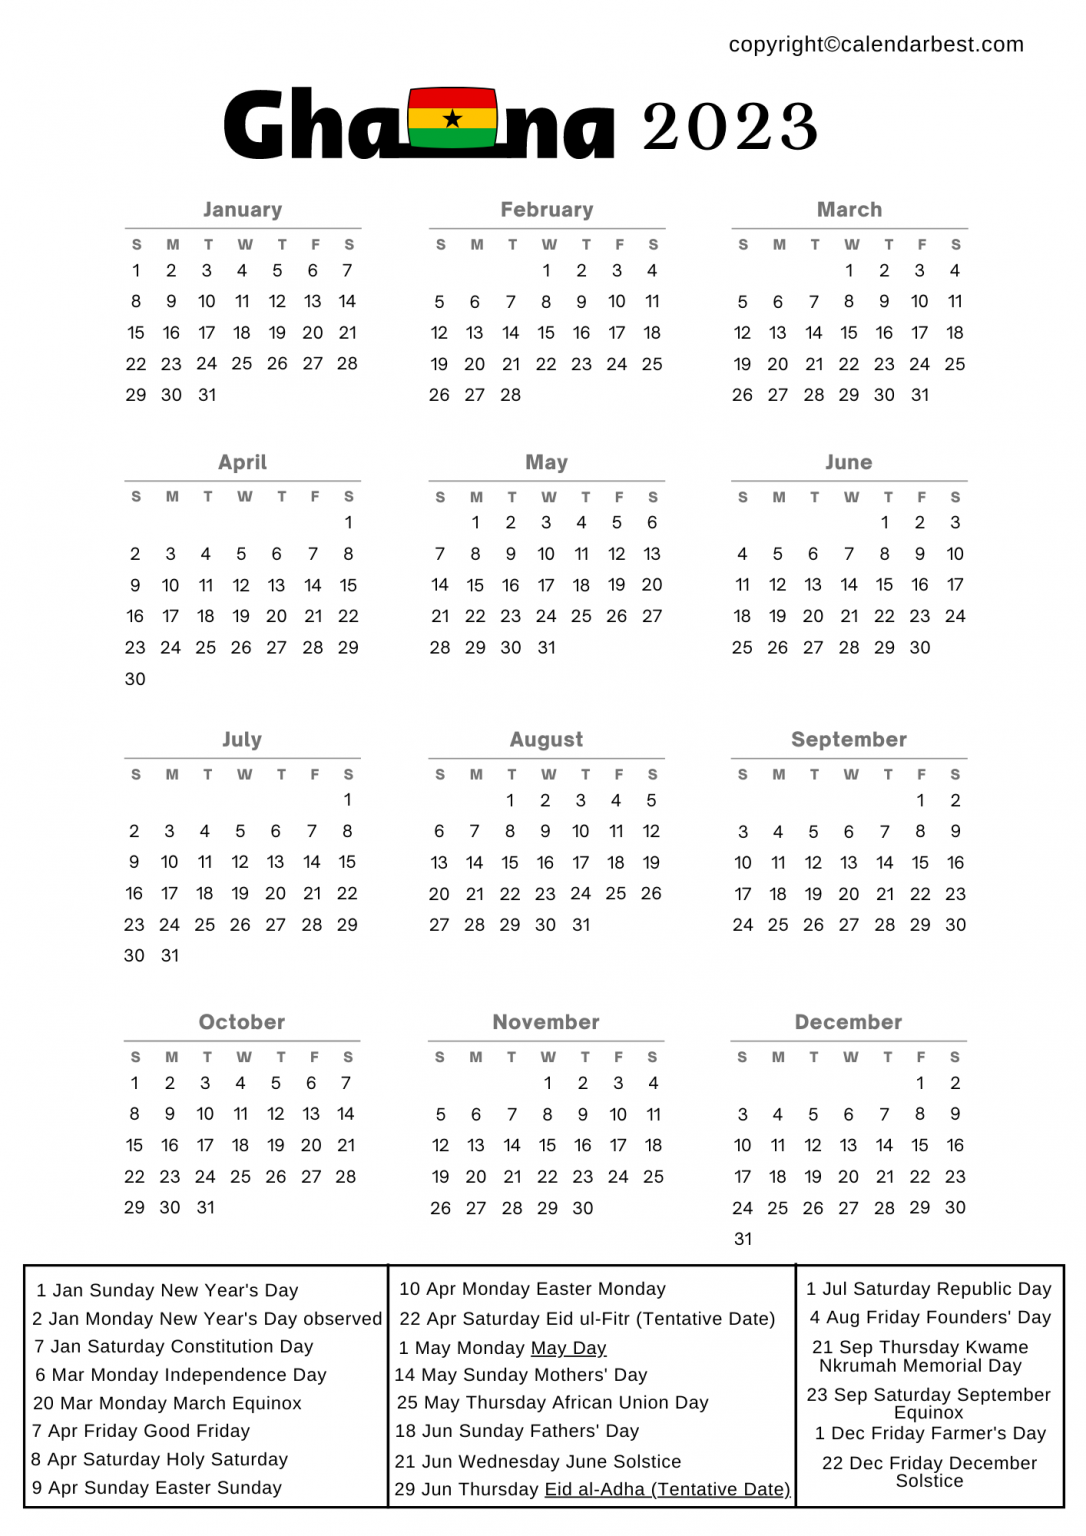 Ghana Calendar 2023 with Holidays - Free Printable in PDF